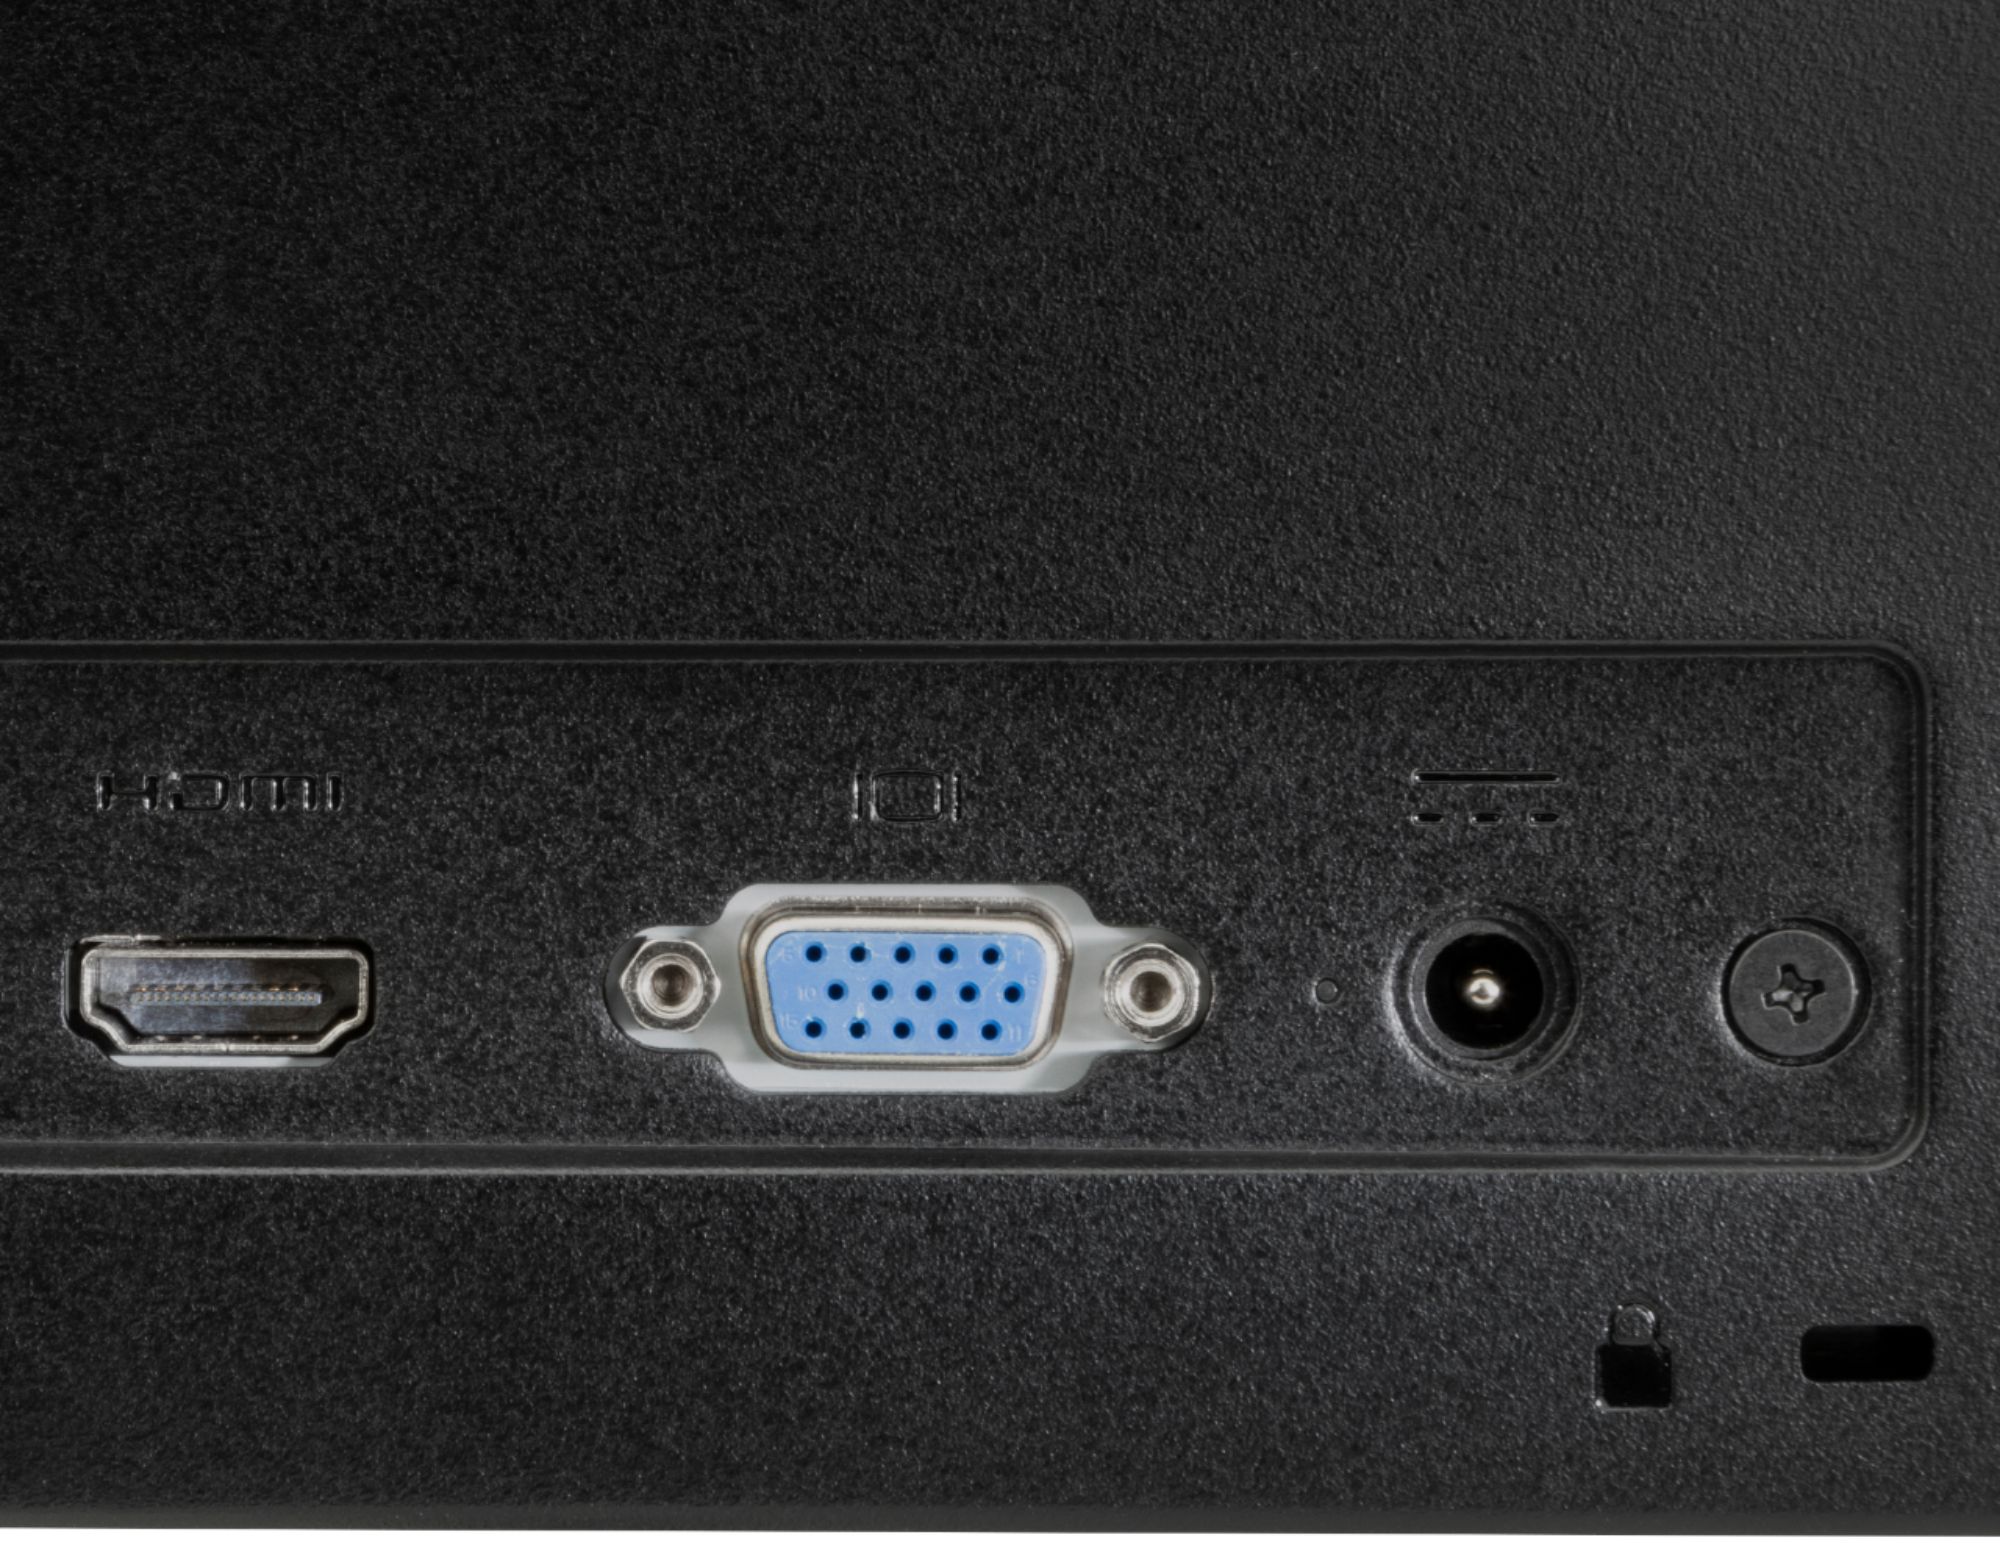 HP 24 IPS LED FHD FreeSync Monitor (HDMI, VGA) Silver and Black m24f -  Best Buy